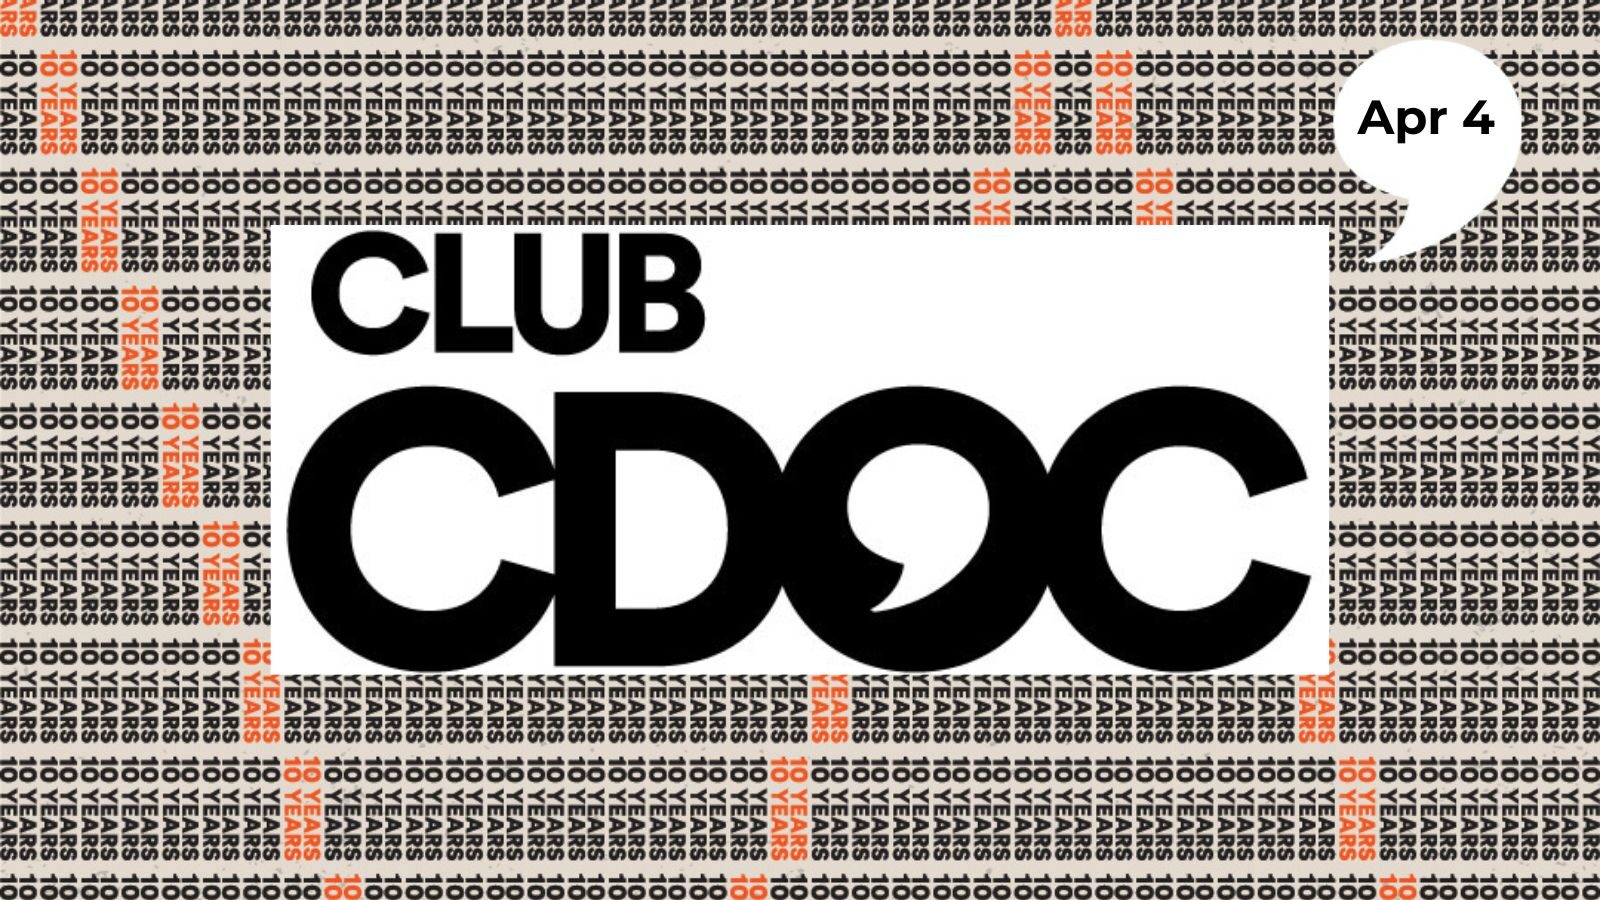 Club CDoc website (1600 x 900 px)